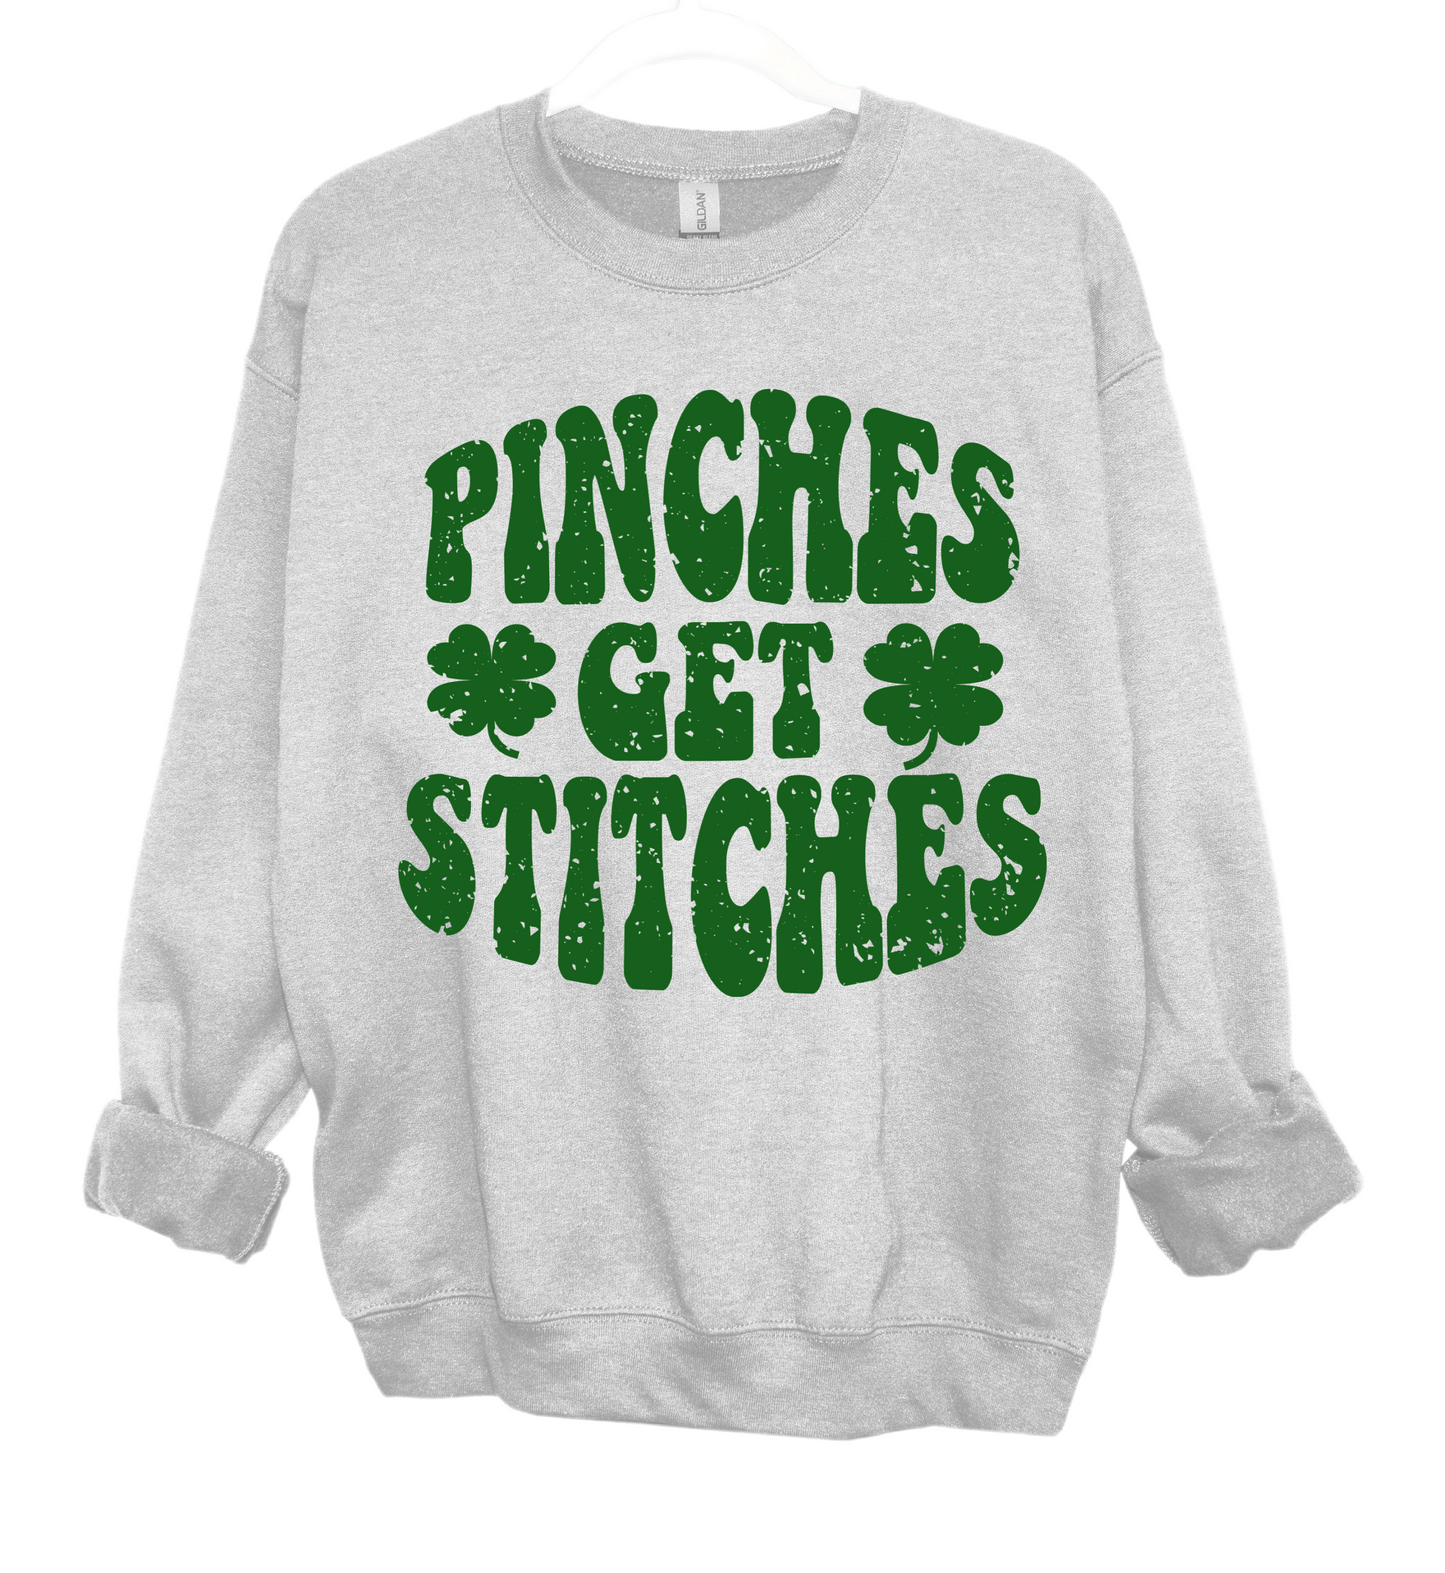 Pinches Get Stitches Sweatshirt / St. Patricks Day Sweatshirt/ Youth and Adult Sizes